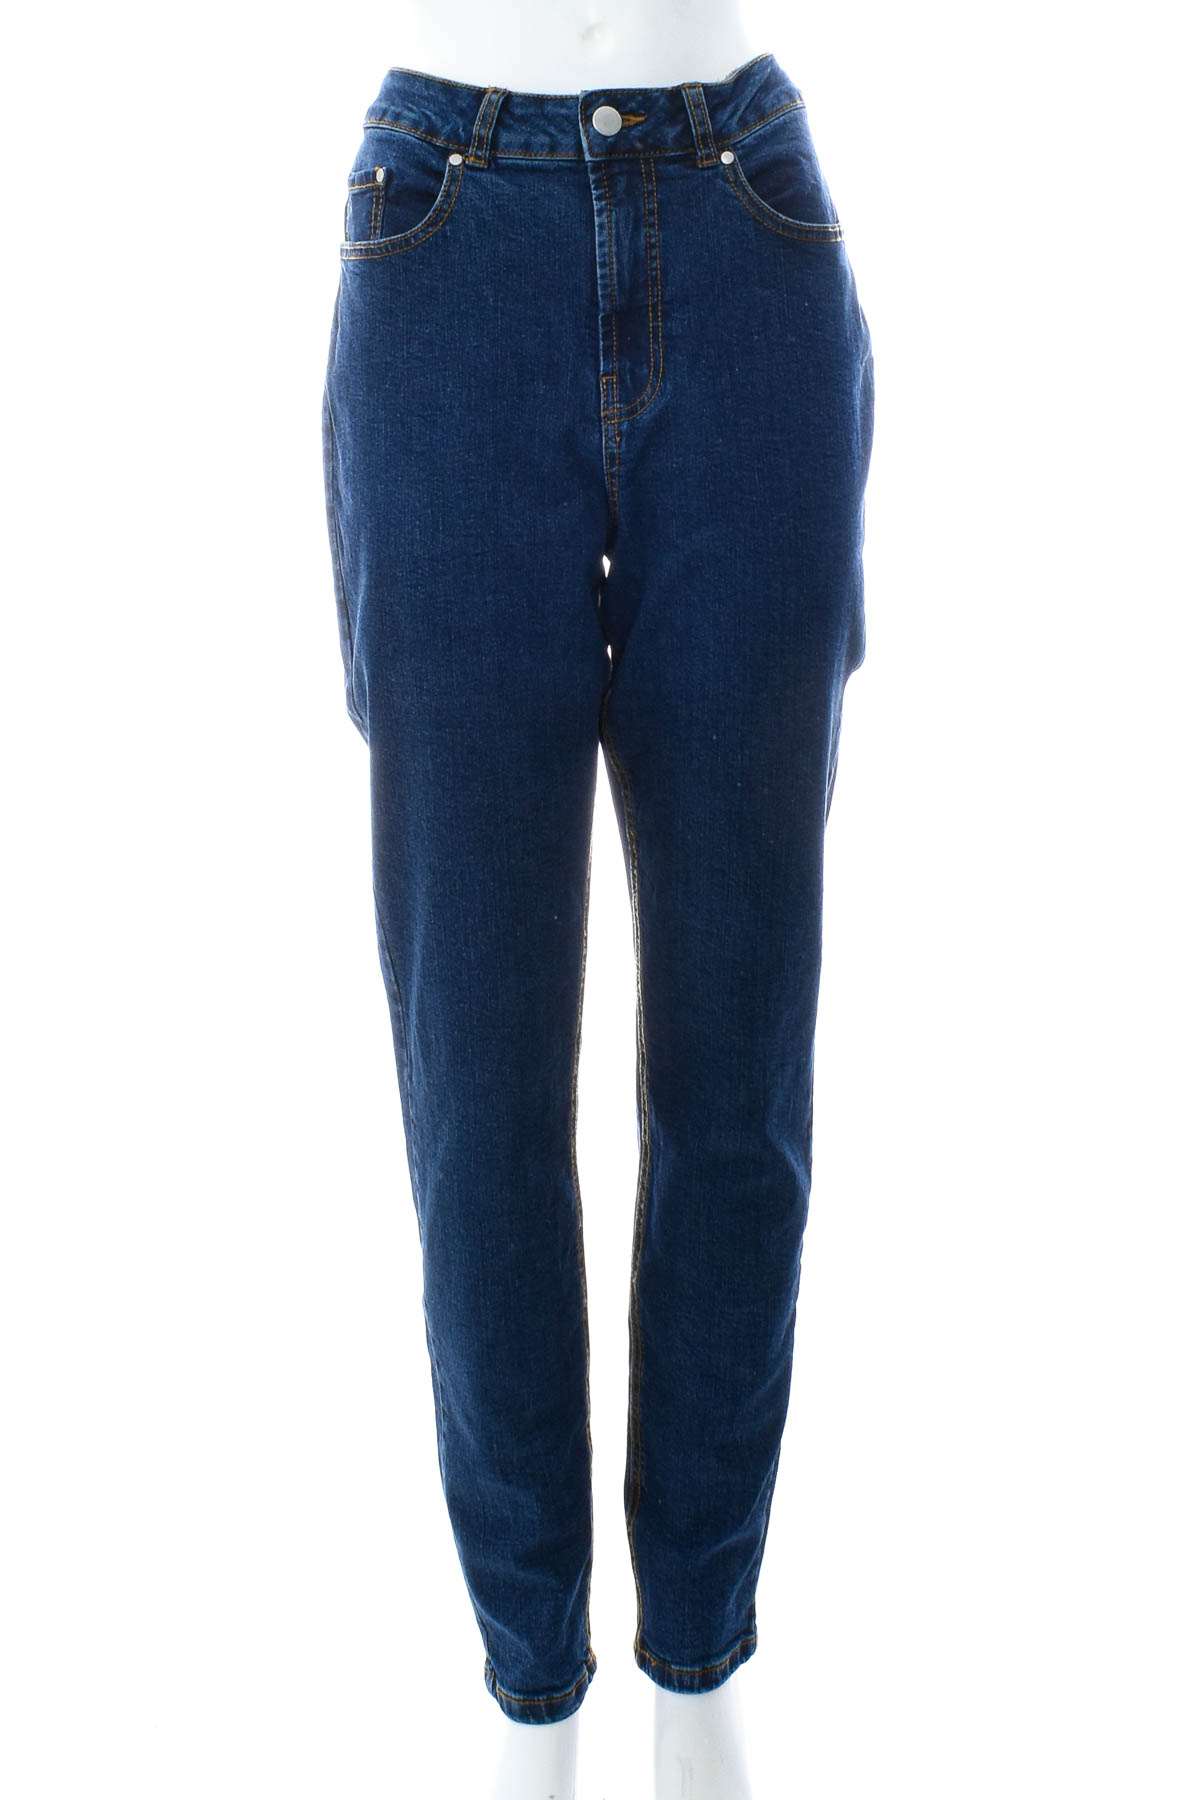 Women's jeans - Suzy Shier - 0